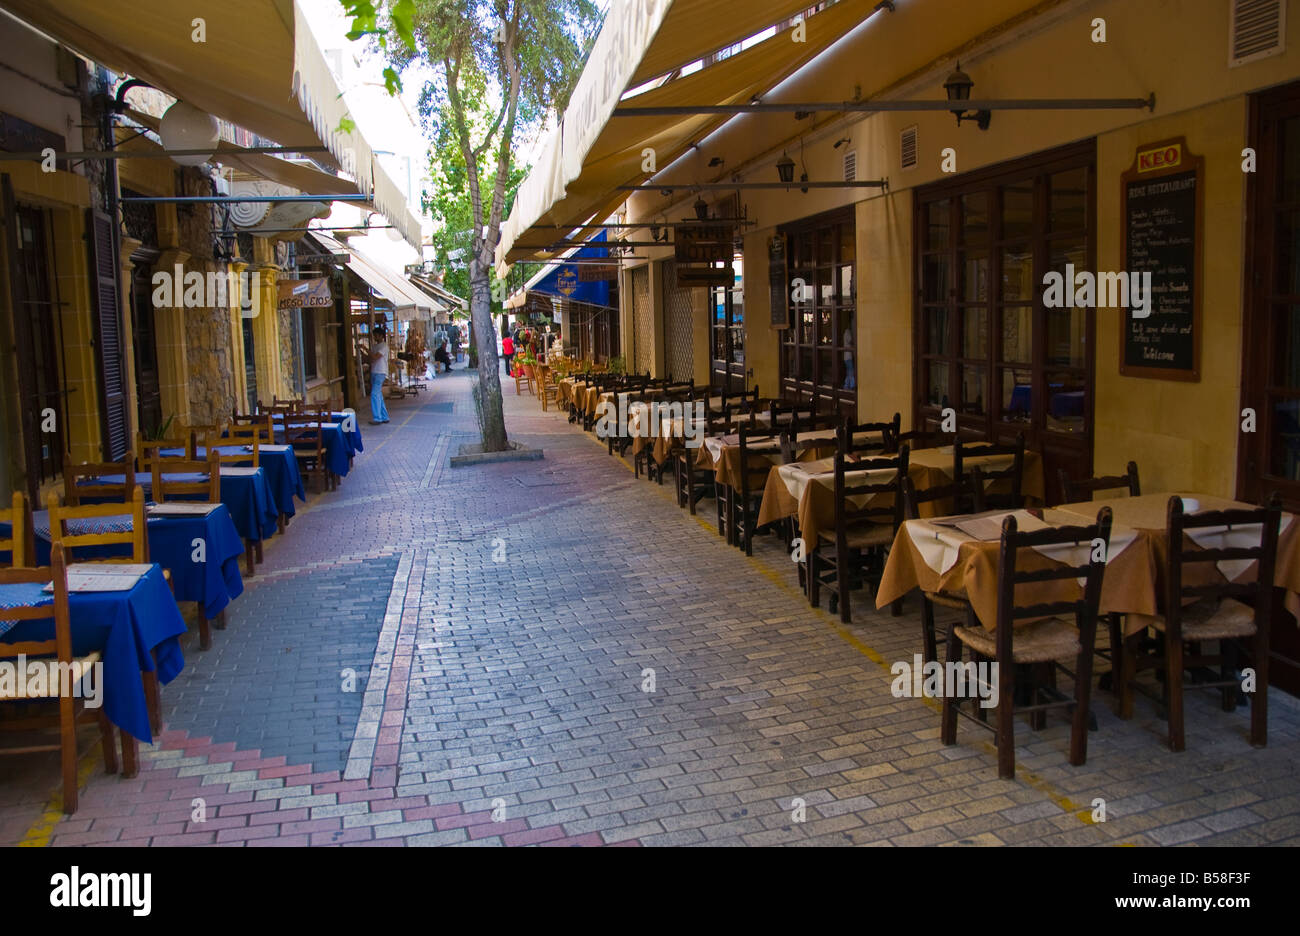 Best Restaurants In Nicosia - The Scale Restaurant - Tia Does Travel